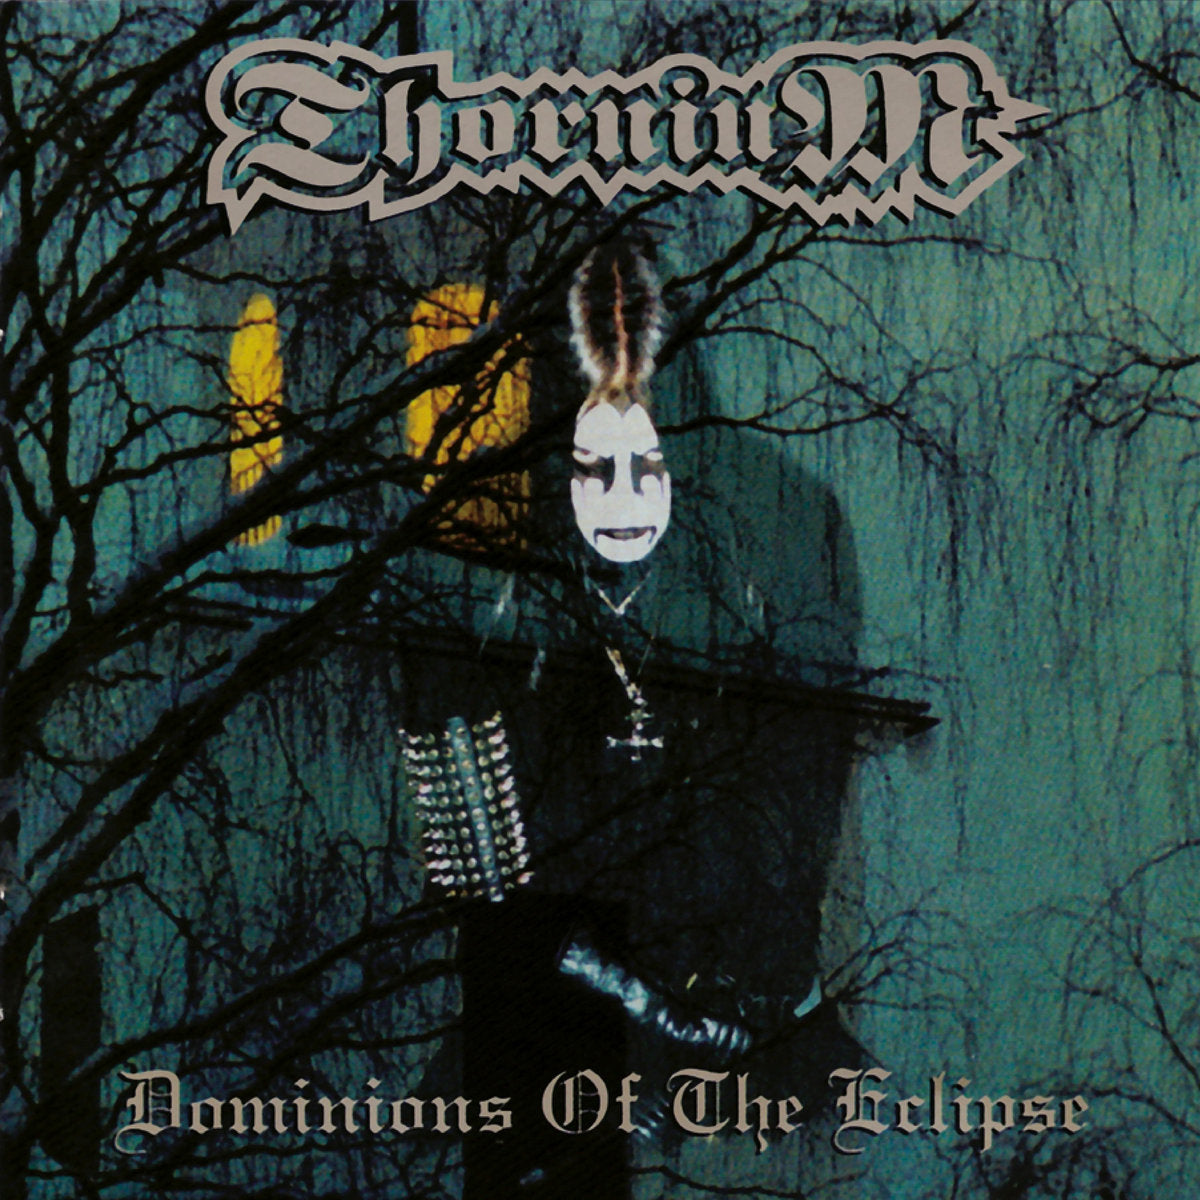 [SOLD OUT] THORNIUM "Dominions of the Eclipse" vinyl 2xLP (double LP gatefold)